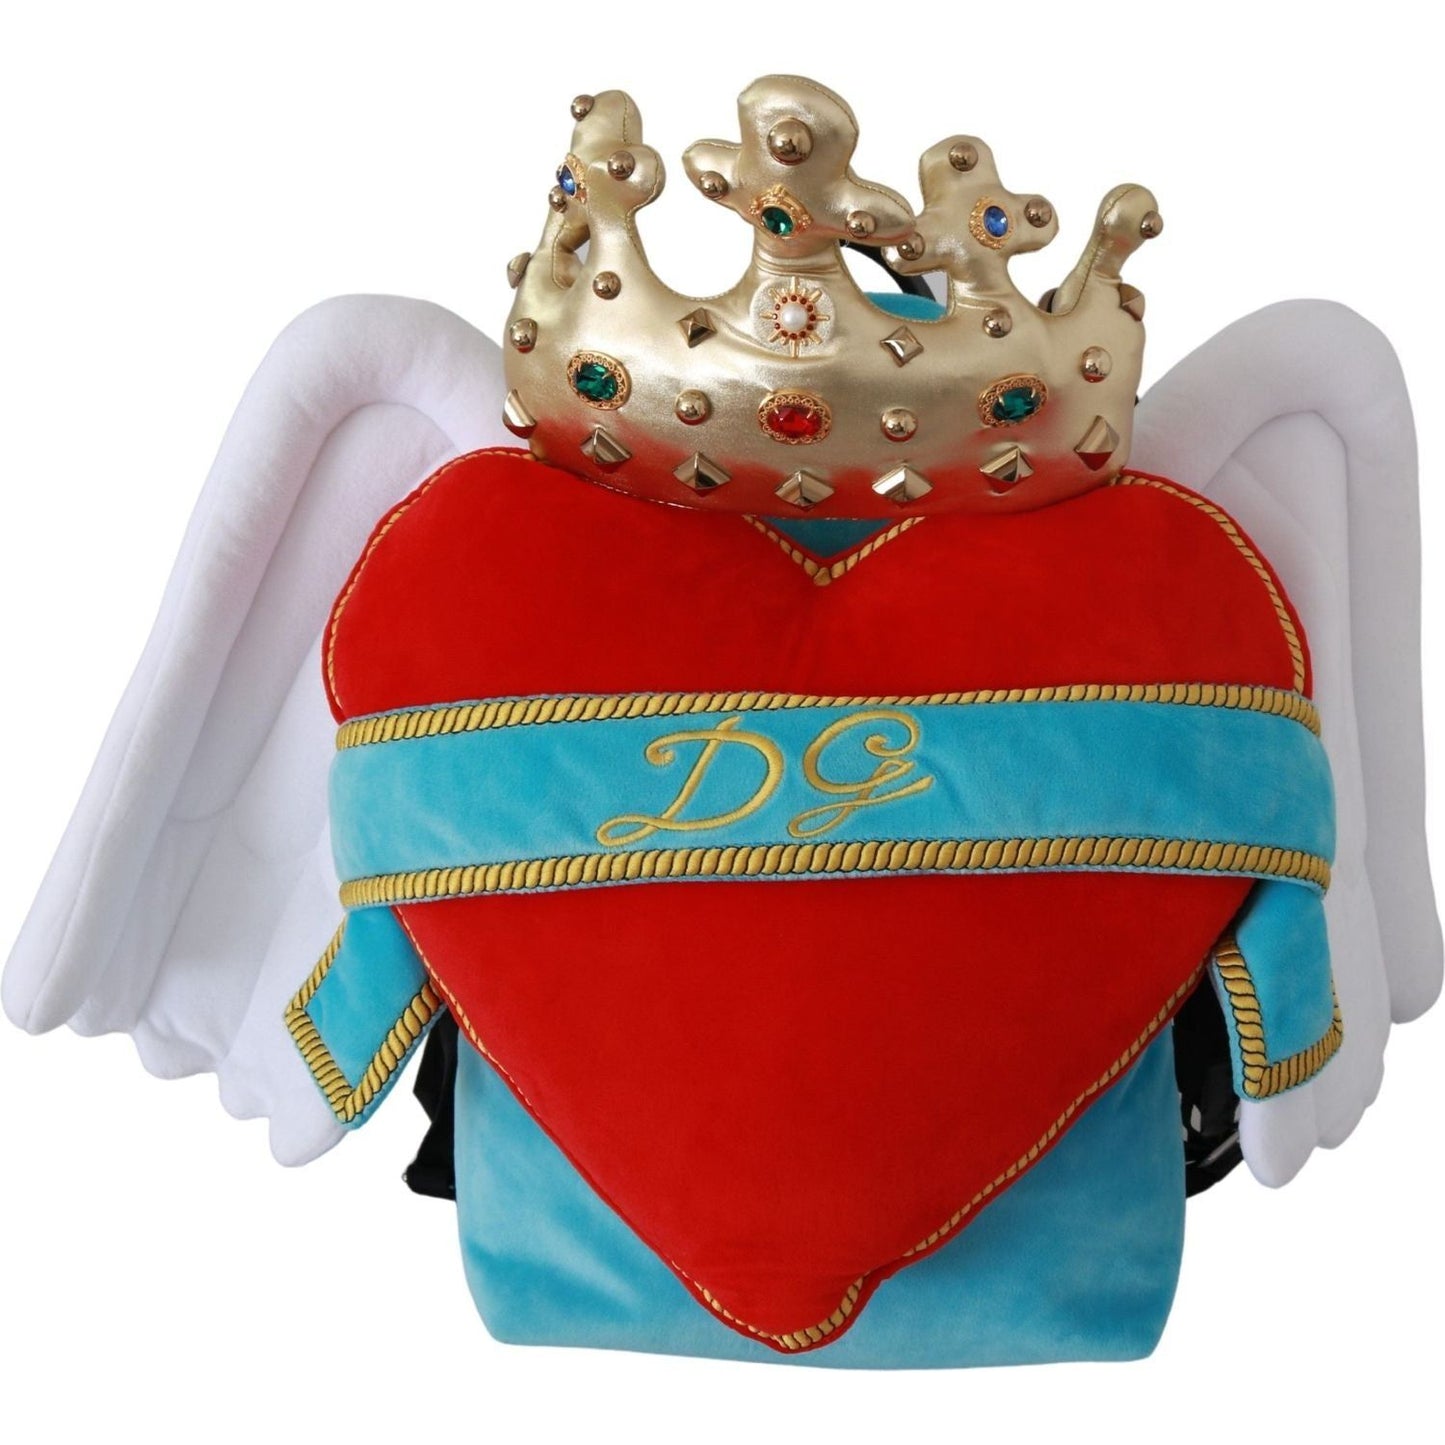 Dolce & Gabbana Jeweled Heart Wings Backpack red-blue-heart-wings-dg-crown-school-backpack Backpack IMG_9790-8f9426c0-3b4.jpg